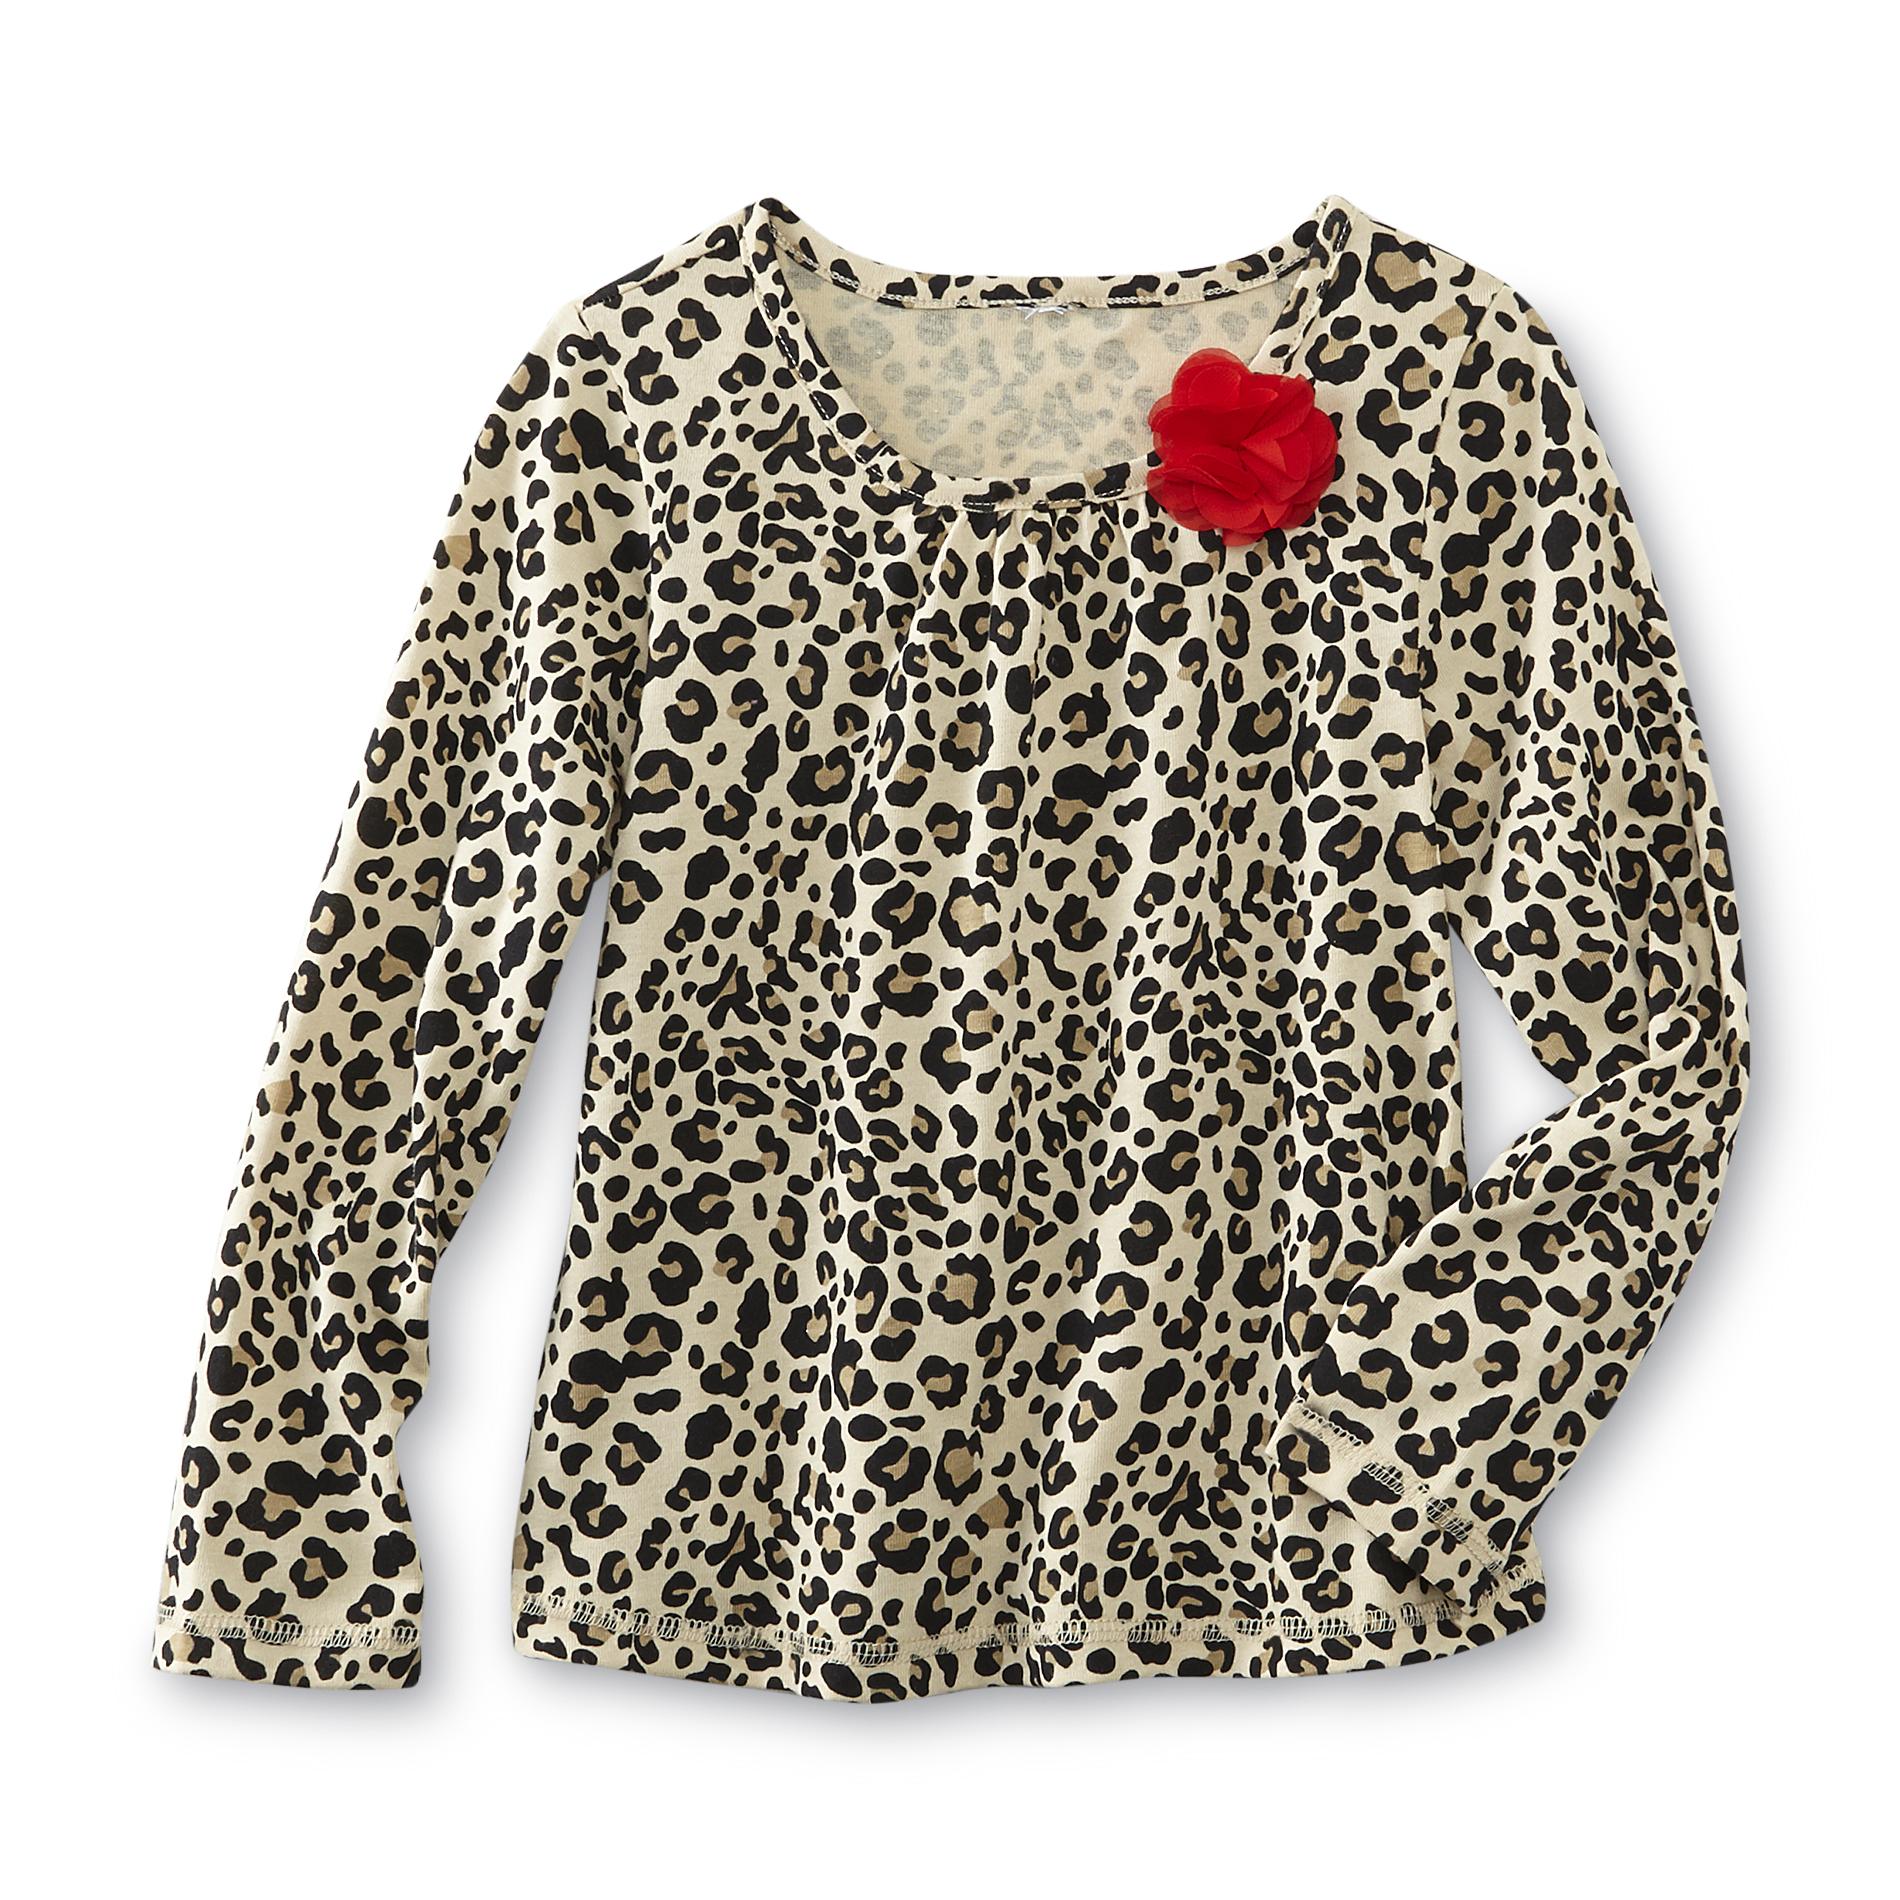 WonderKids Infant & Toddler Girl's Long-Sleeve Top - Leopard Print